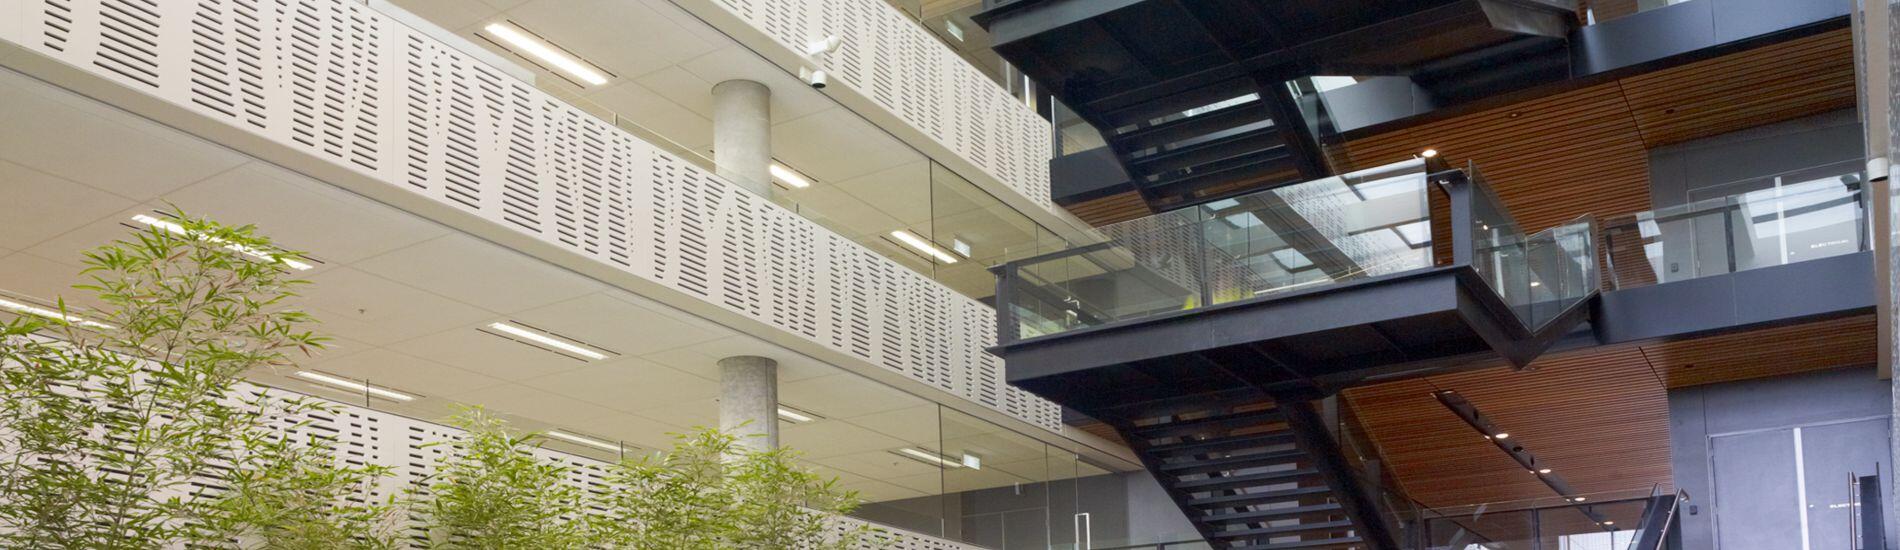 Custom Tree Pattern SUPACOUSTIC Acoustic Panels and SUPATILE SLAT Ceiling Tiles Enhance Commercial Atrium